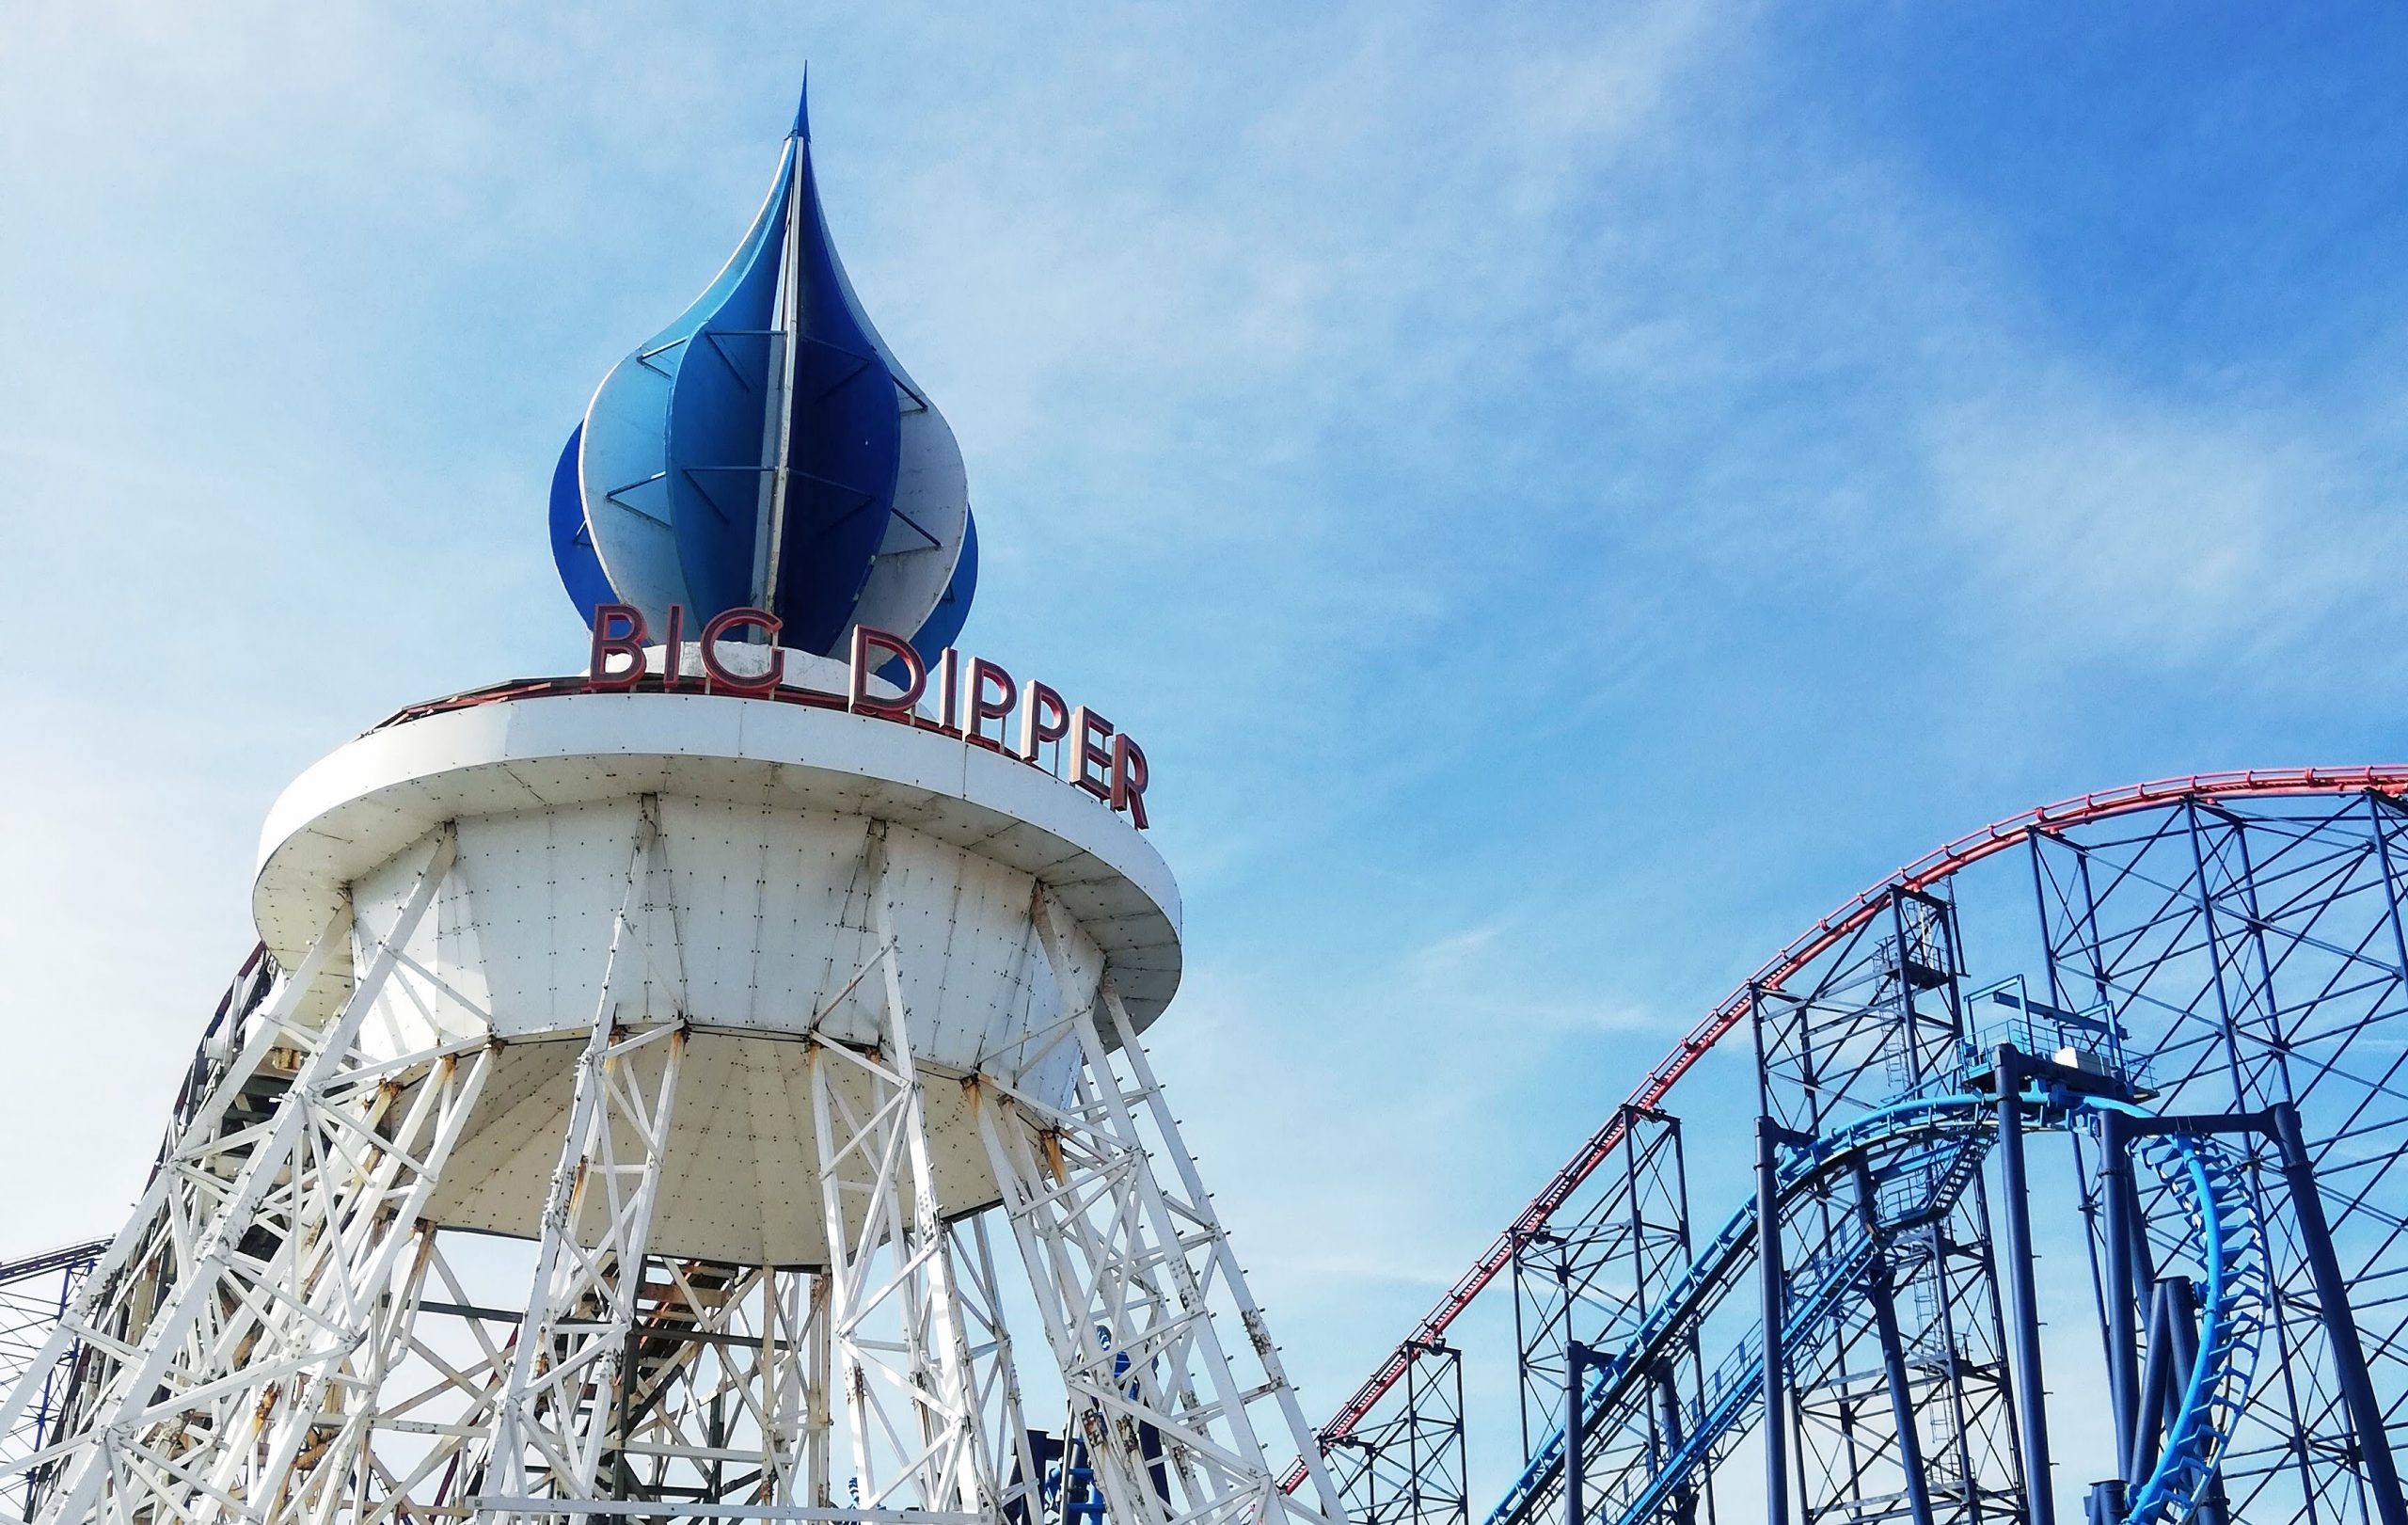 The Big Dipper rollercoaster at Bl